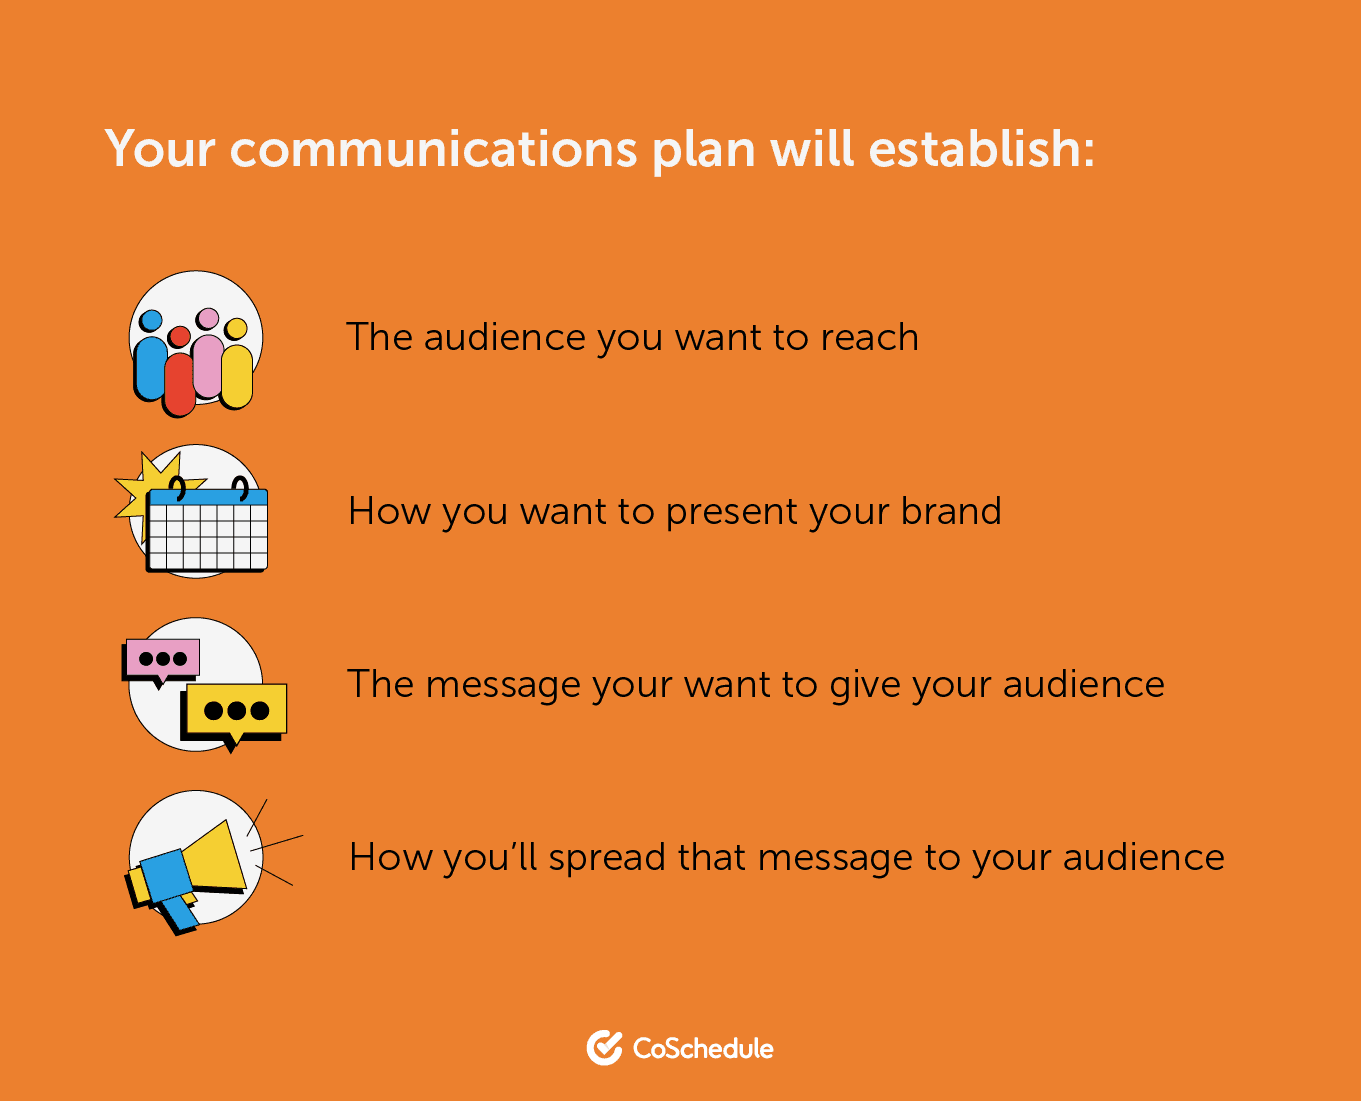 Your communications plan will establish